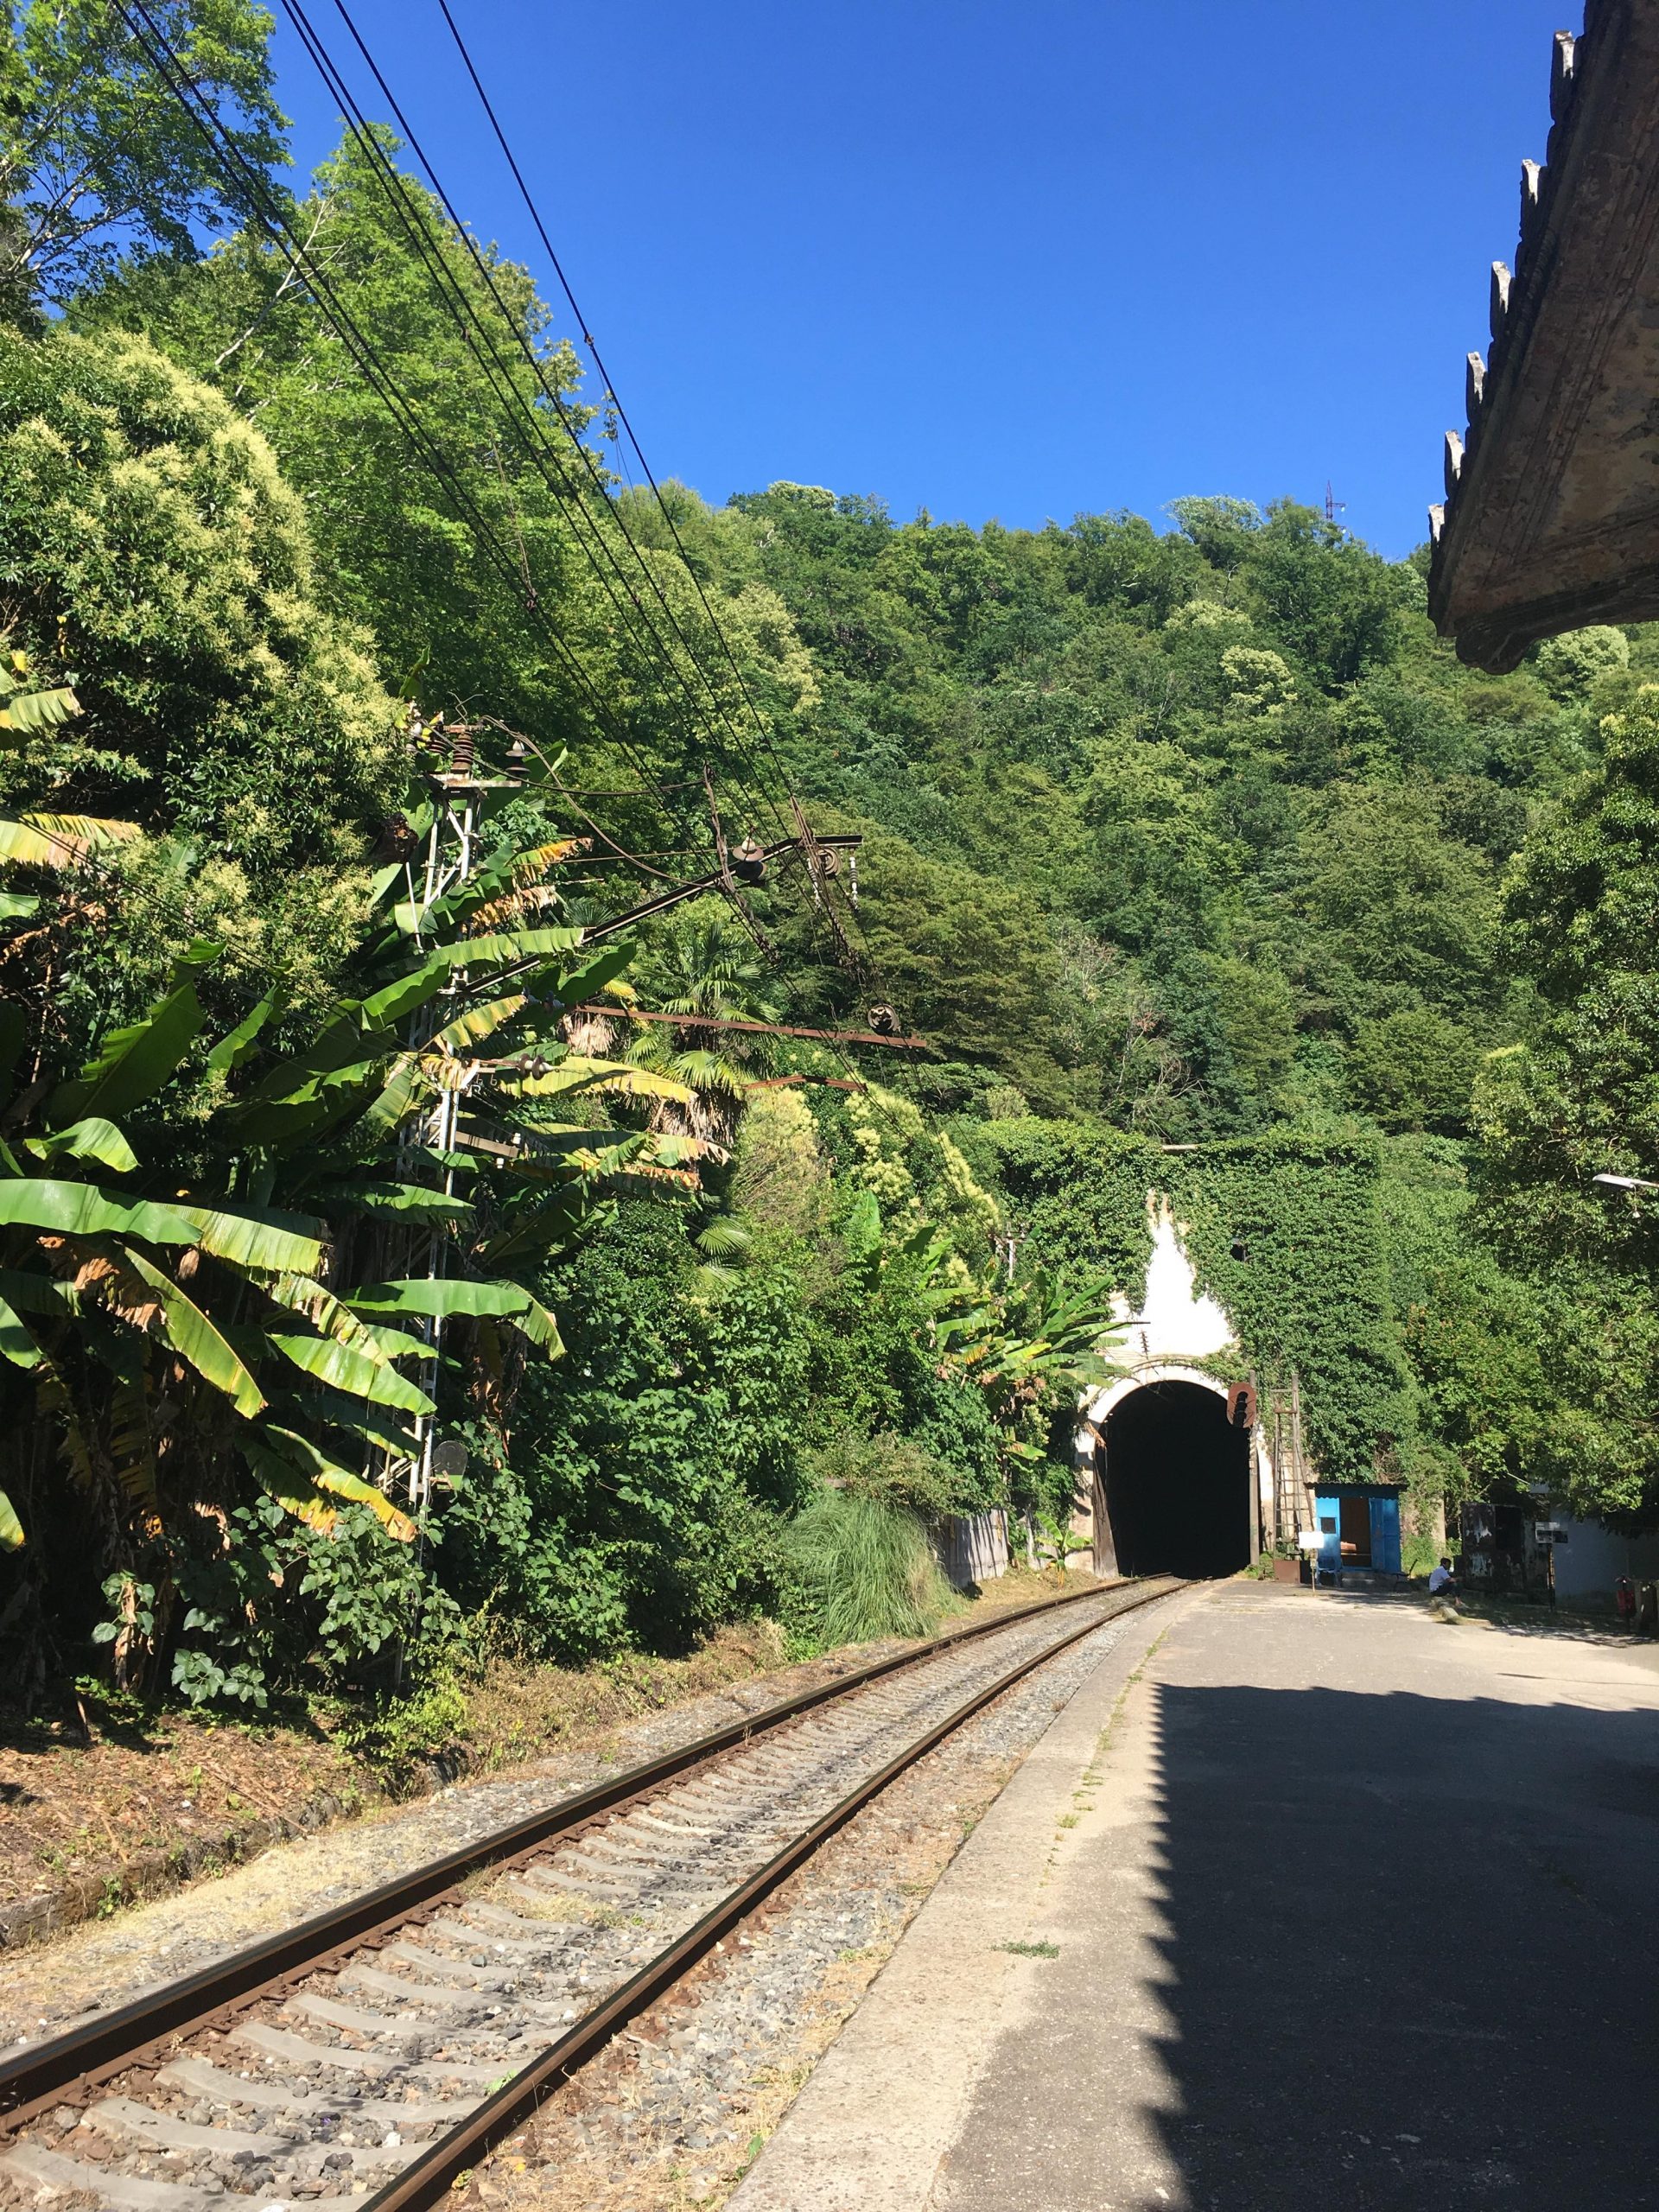 While visiting Abkhazia, David Stone stumbled on a train tunnel